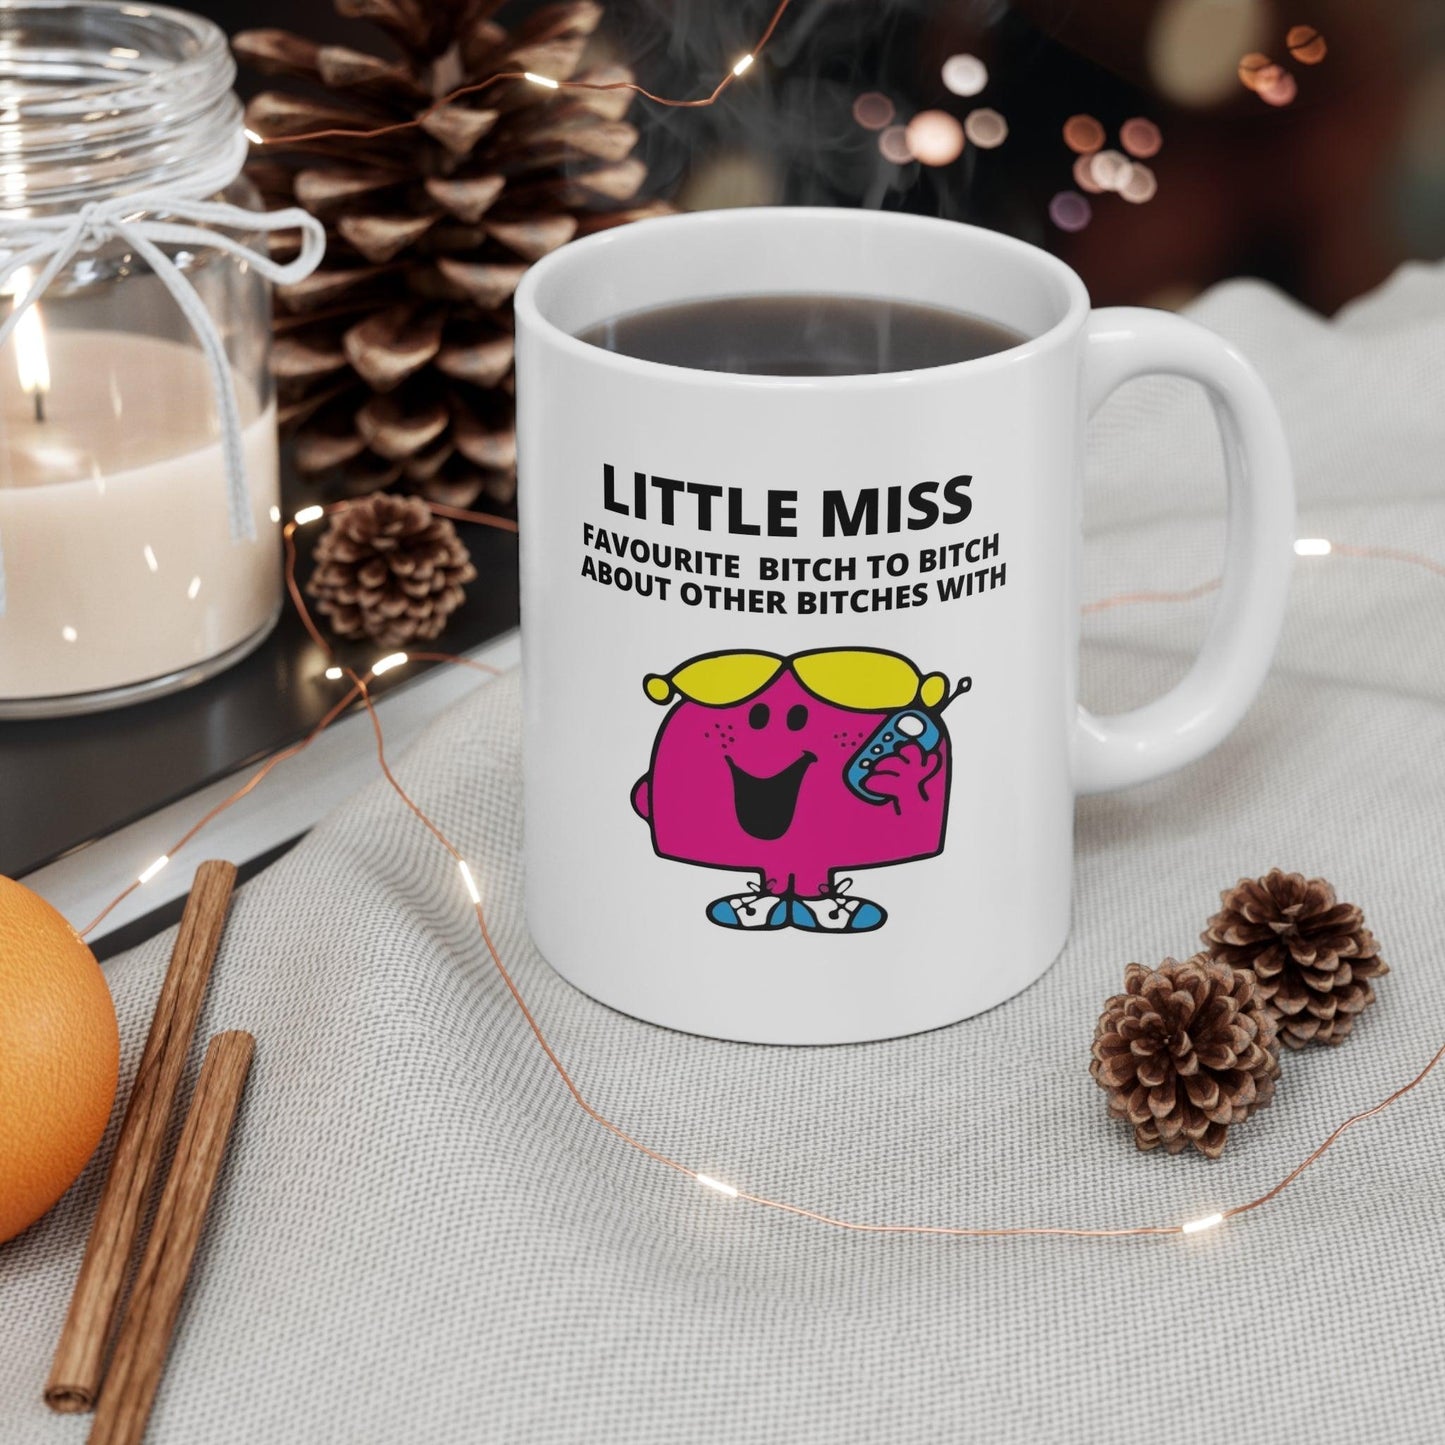 Little Miss Ceramic Mug 11oz